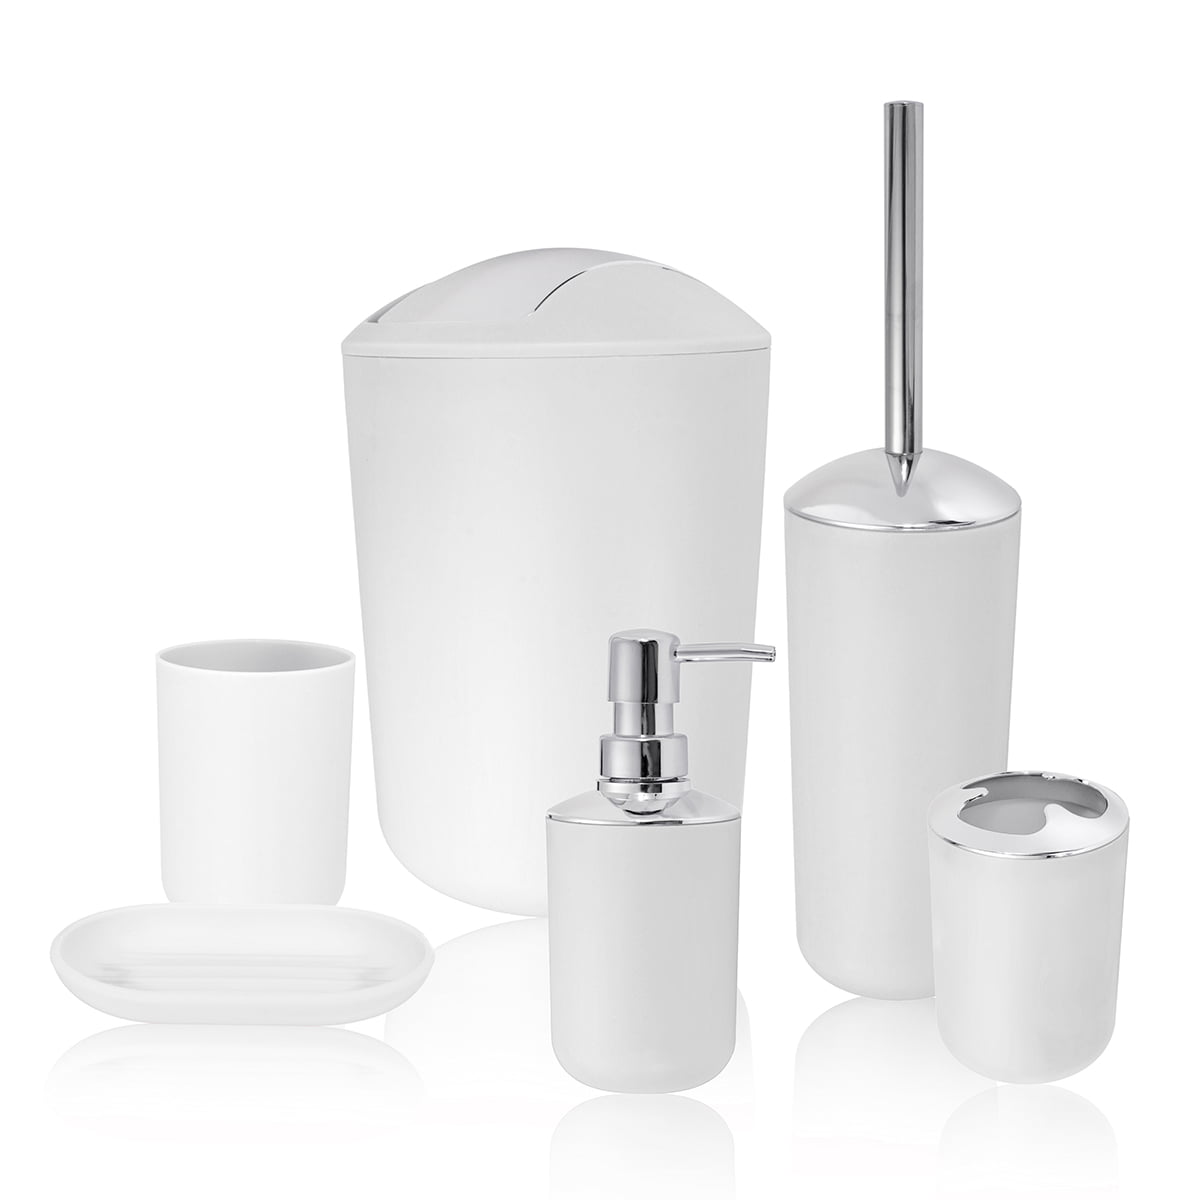 6pcs/Set Bathroom Accessory Bin Soap Dish Dispenser Tumbler Toothbrush Holder 